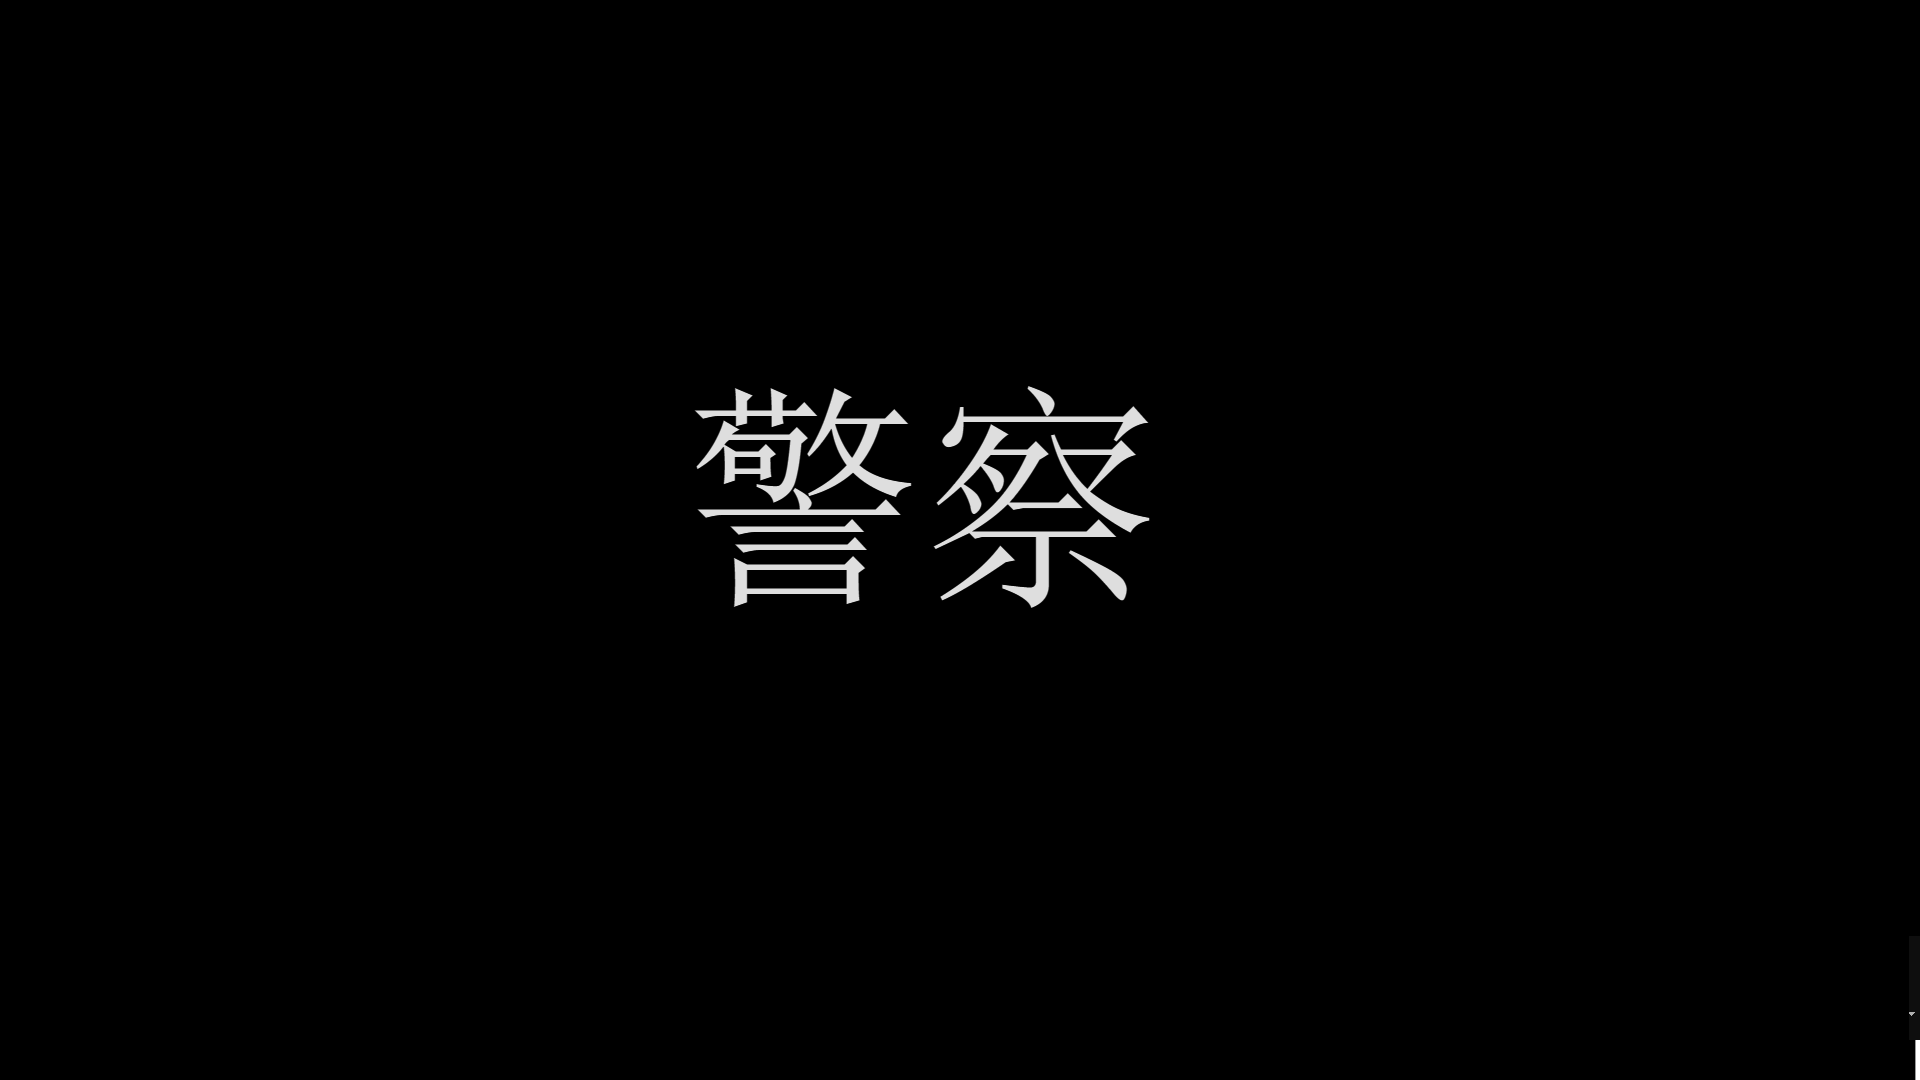 General 1920x1080 police minimalism kanji